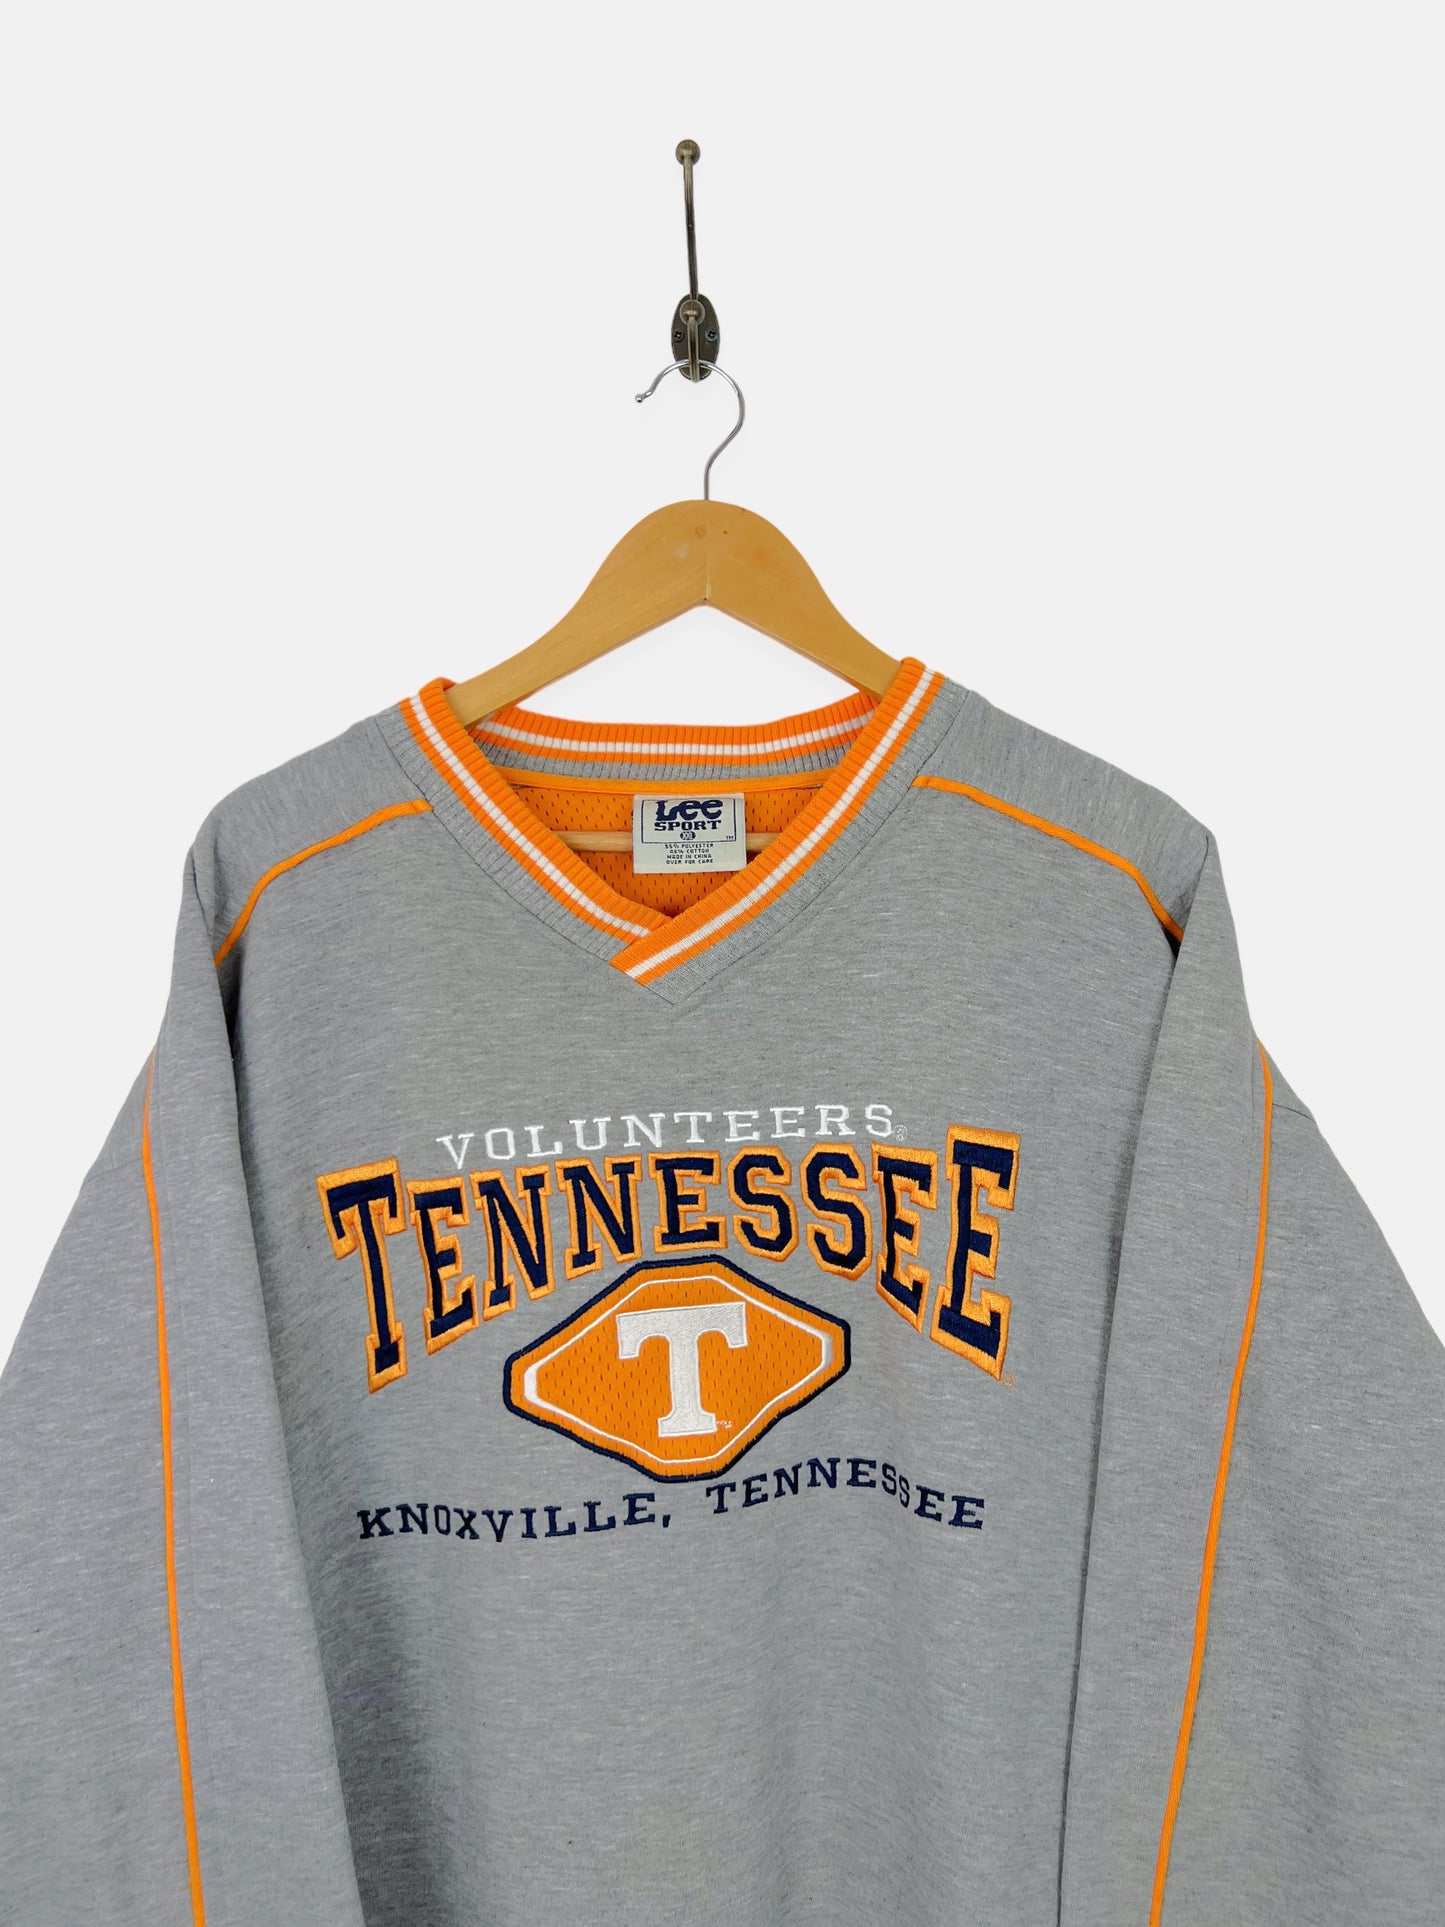 90's Tennessee Volunteers Embroidered Vintage Sweatshirt Size 2XL